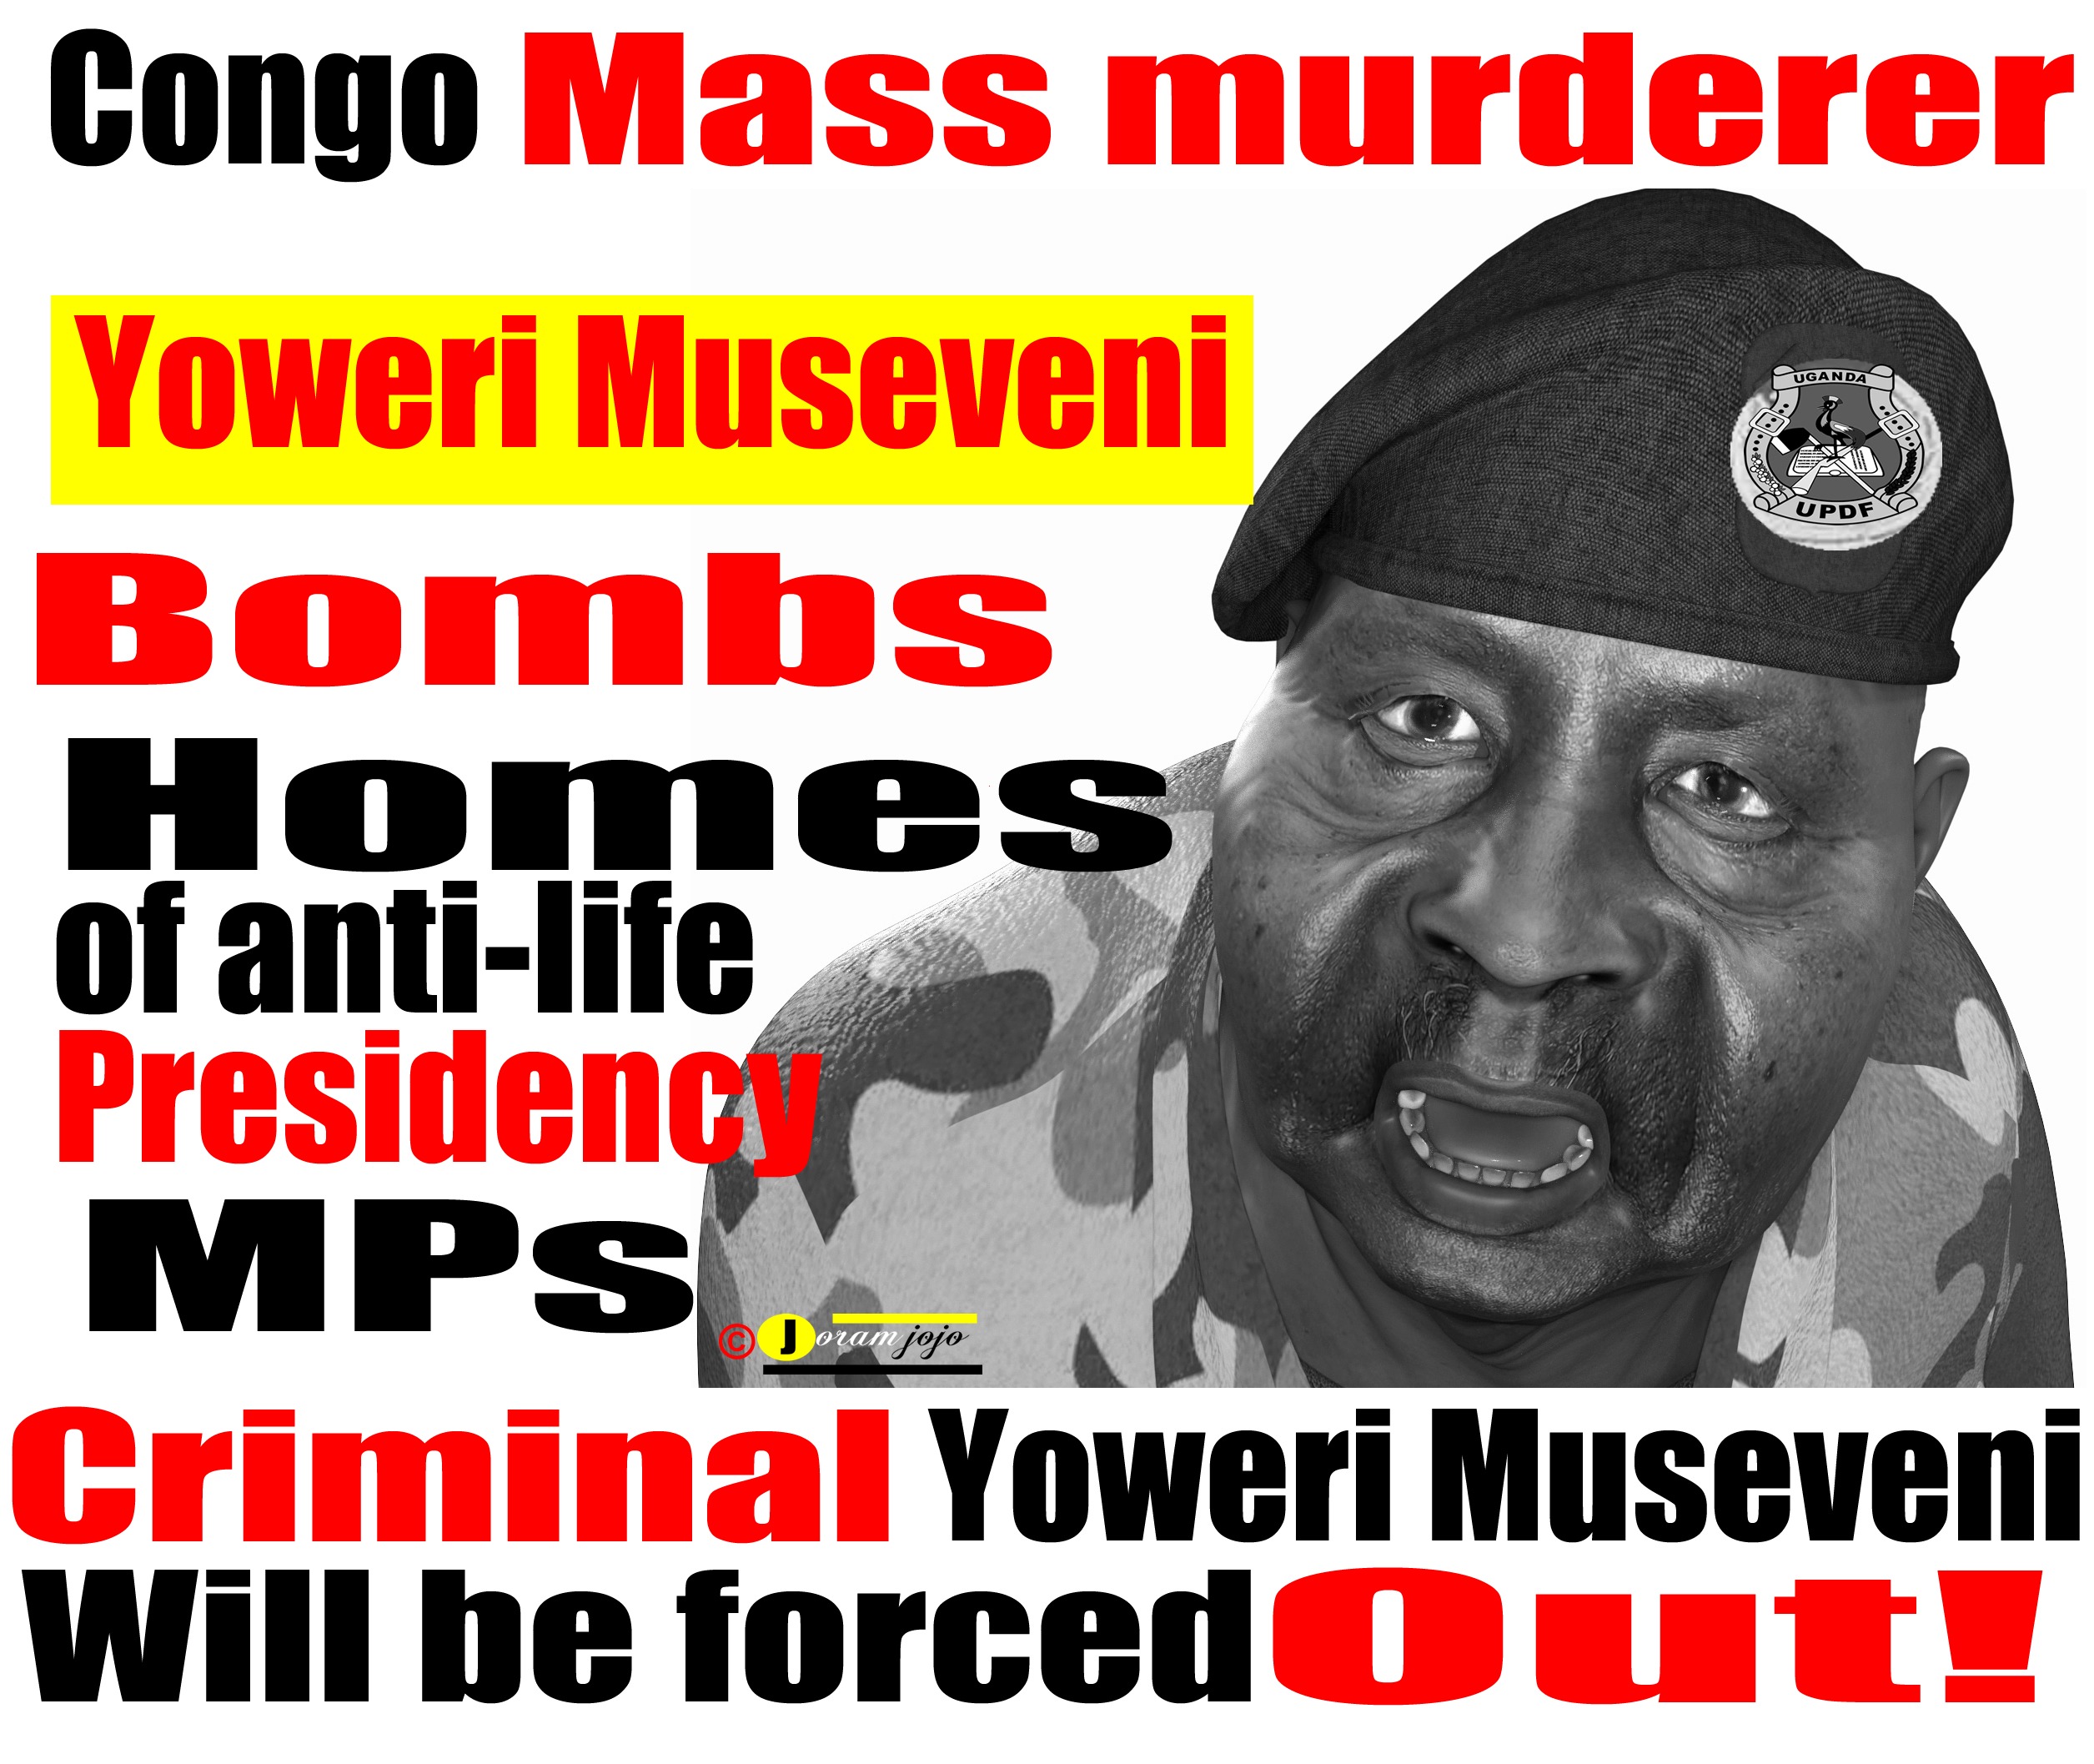 Yoweri Museveni Using Terrorism to silence opposition members of Parliament